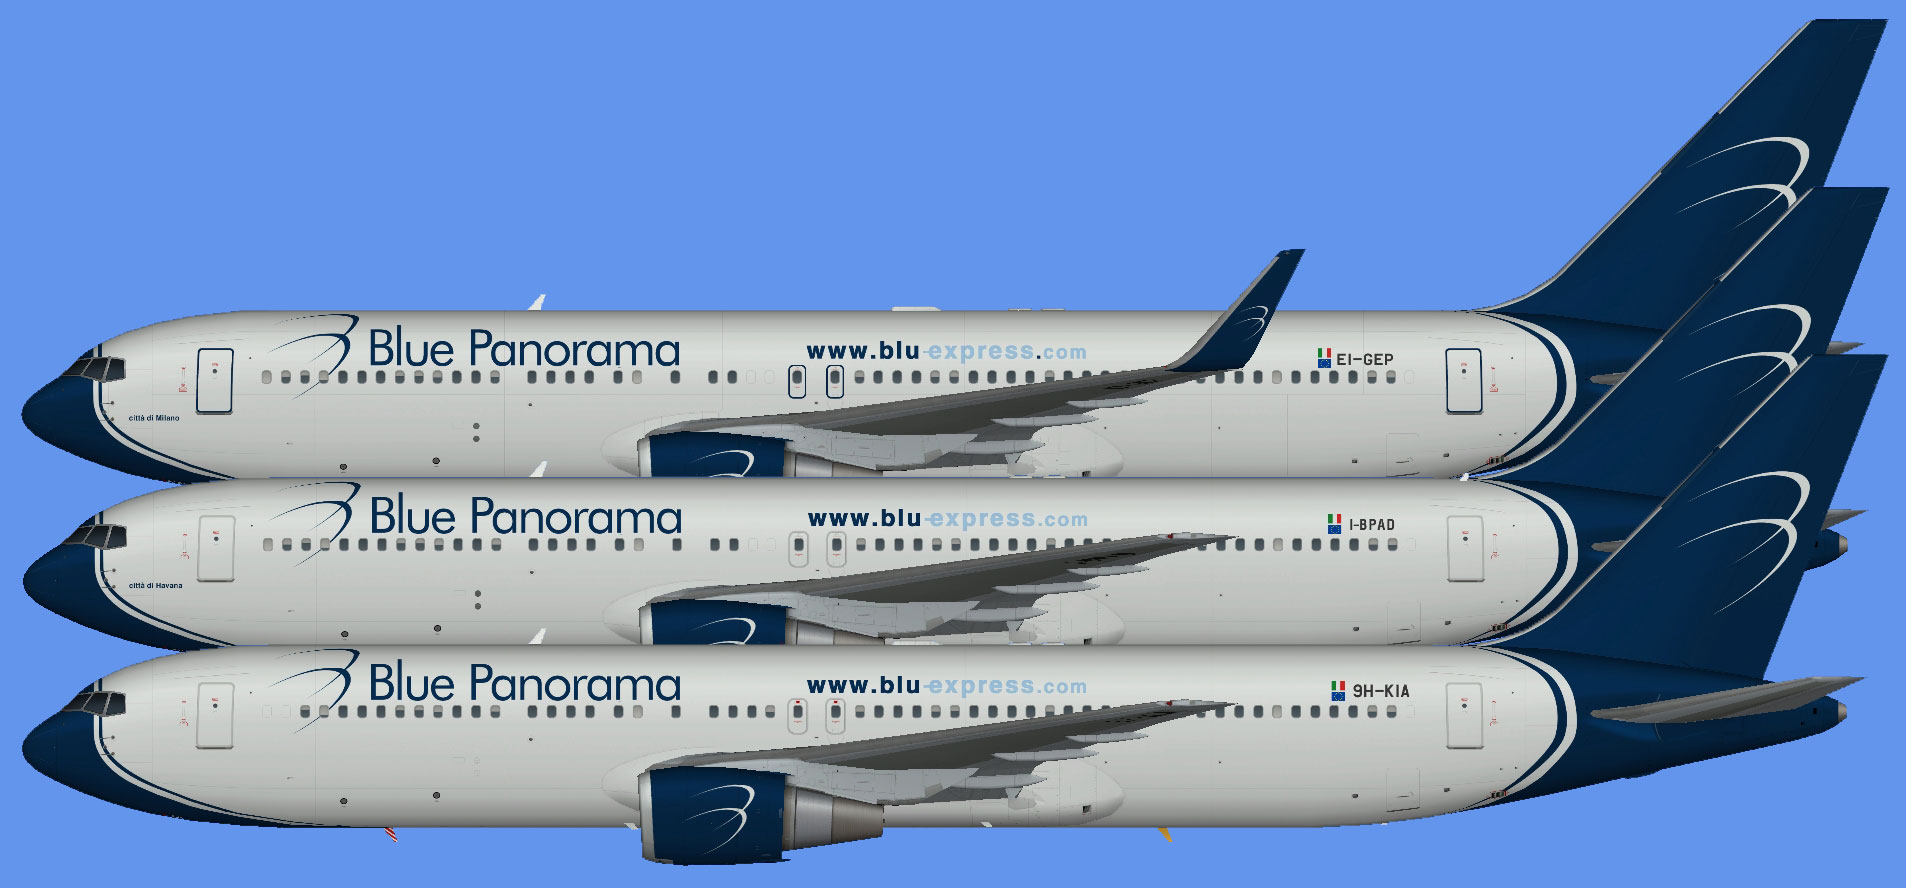 Blue Panorama Boeing 767-300